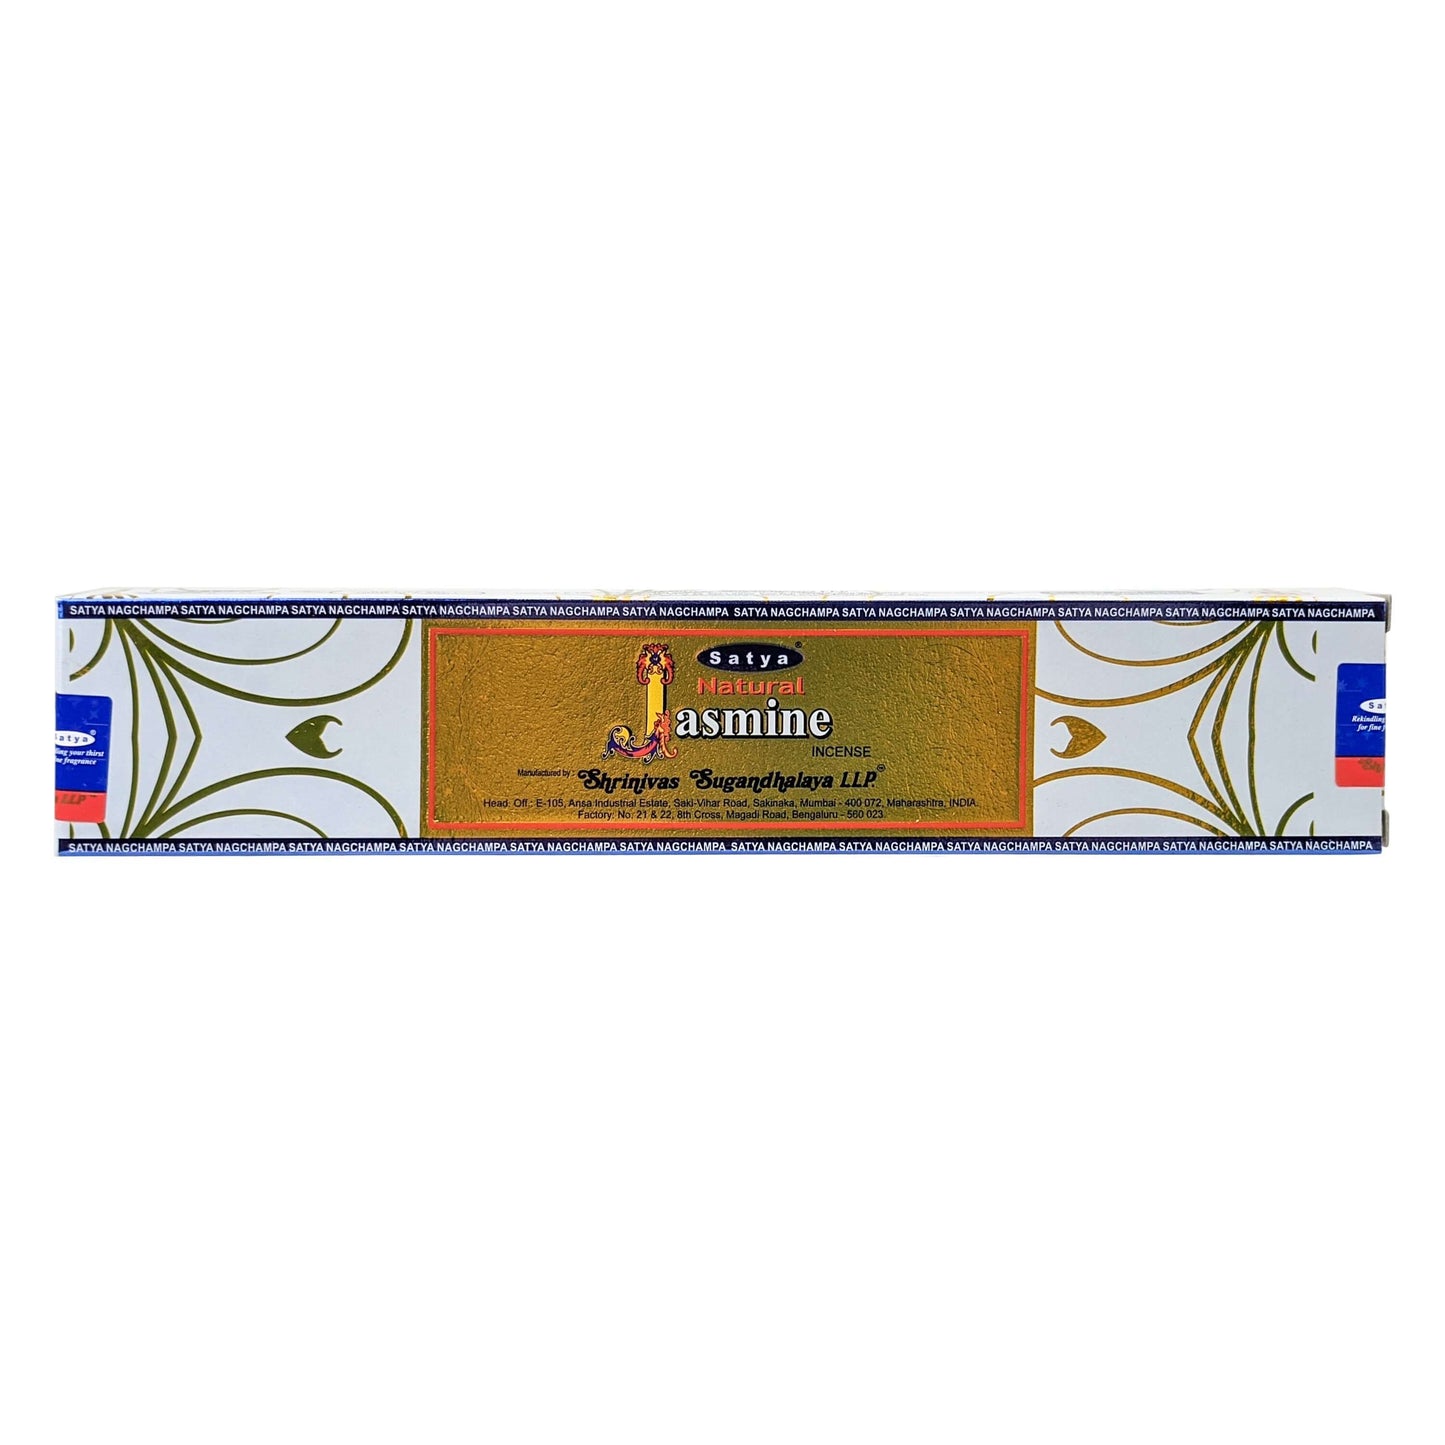 Satya Natural Jasmine Incense Sticks, 15g Pack